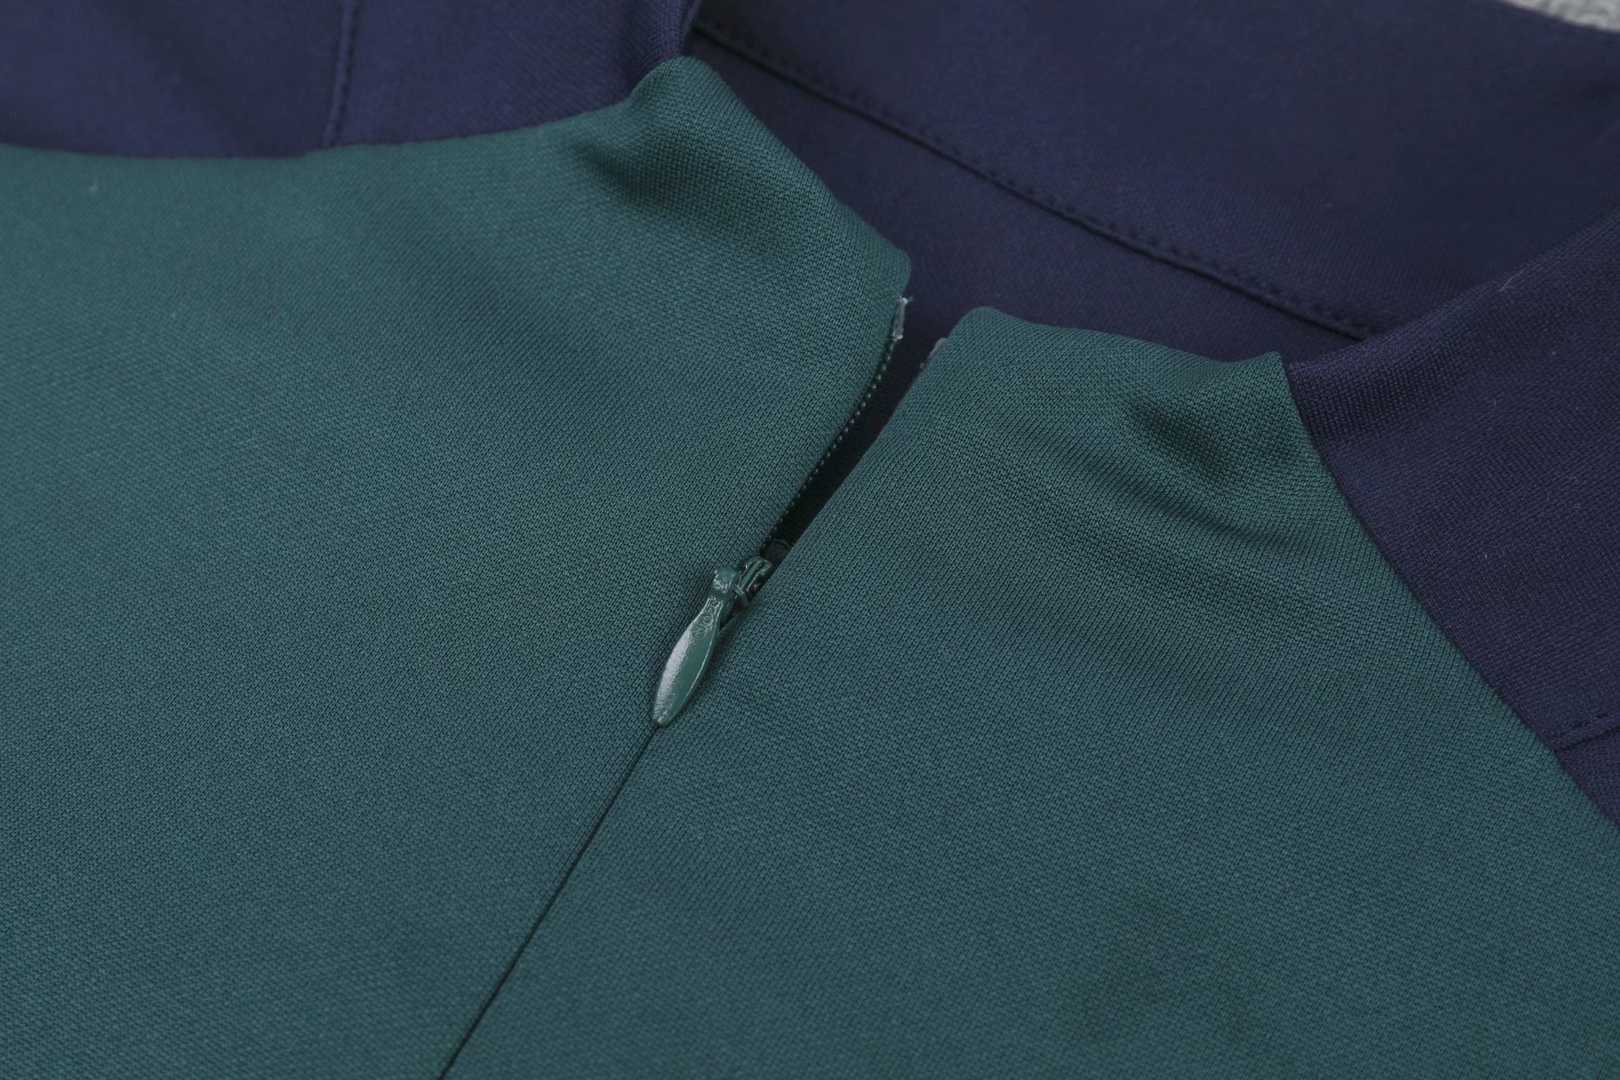 2019/20 Italy Half Zip Green Soccer Training Suit (Jacket + Pants )